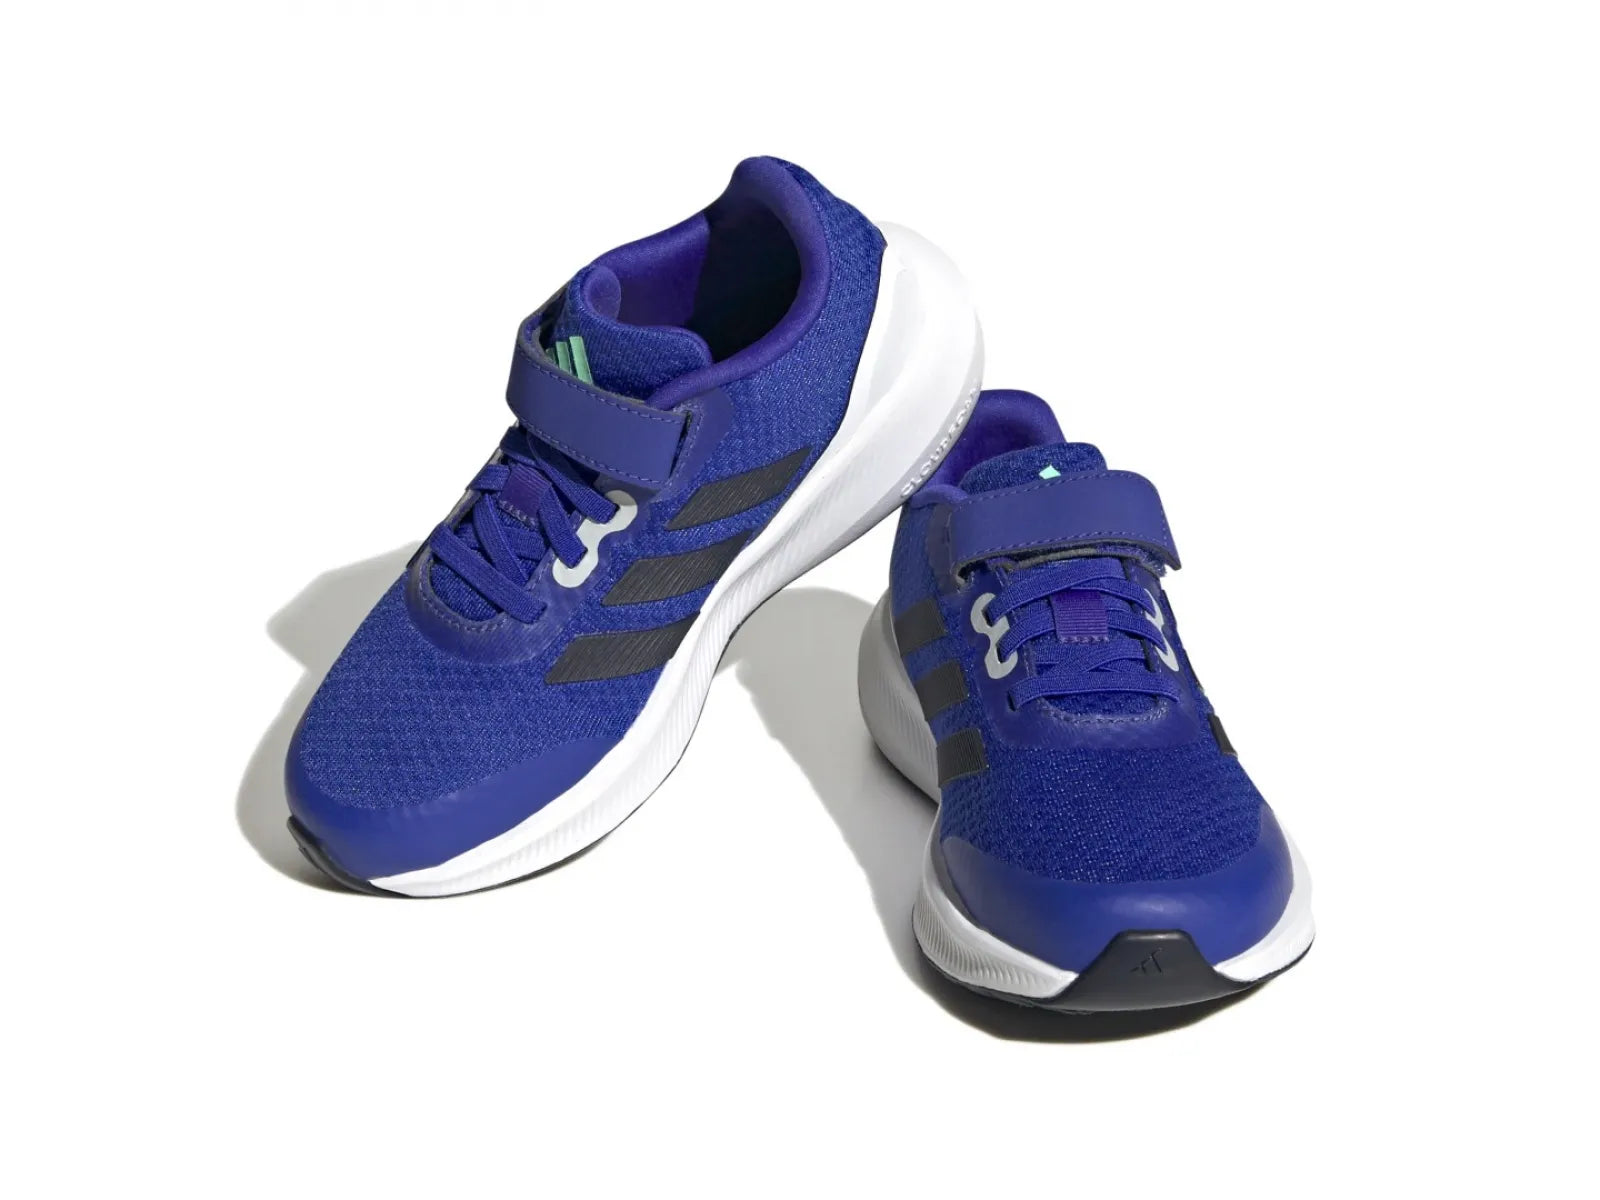 A-U66 (Adidas run flacon 3.0 elastic lace top strap shoe lucid blue/legend ink/white) 92394095